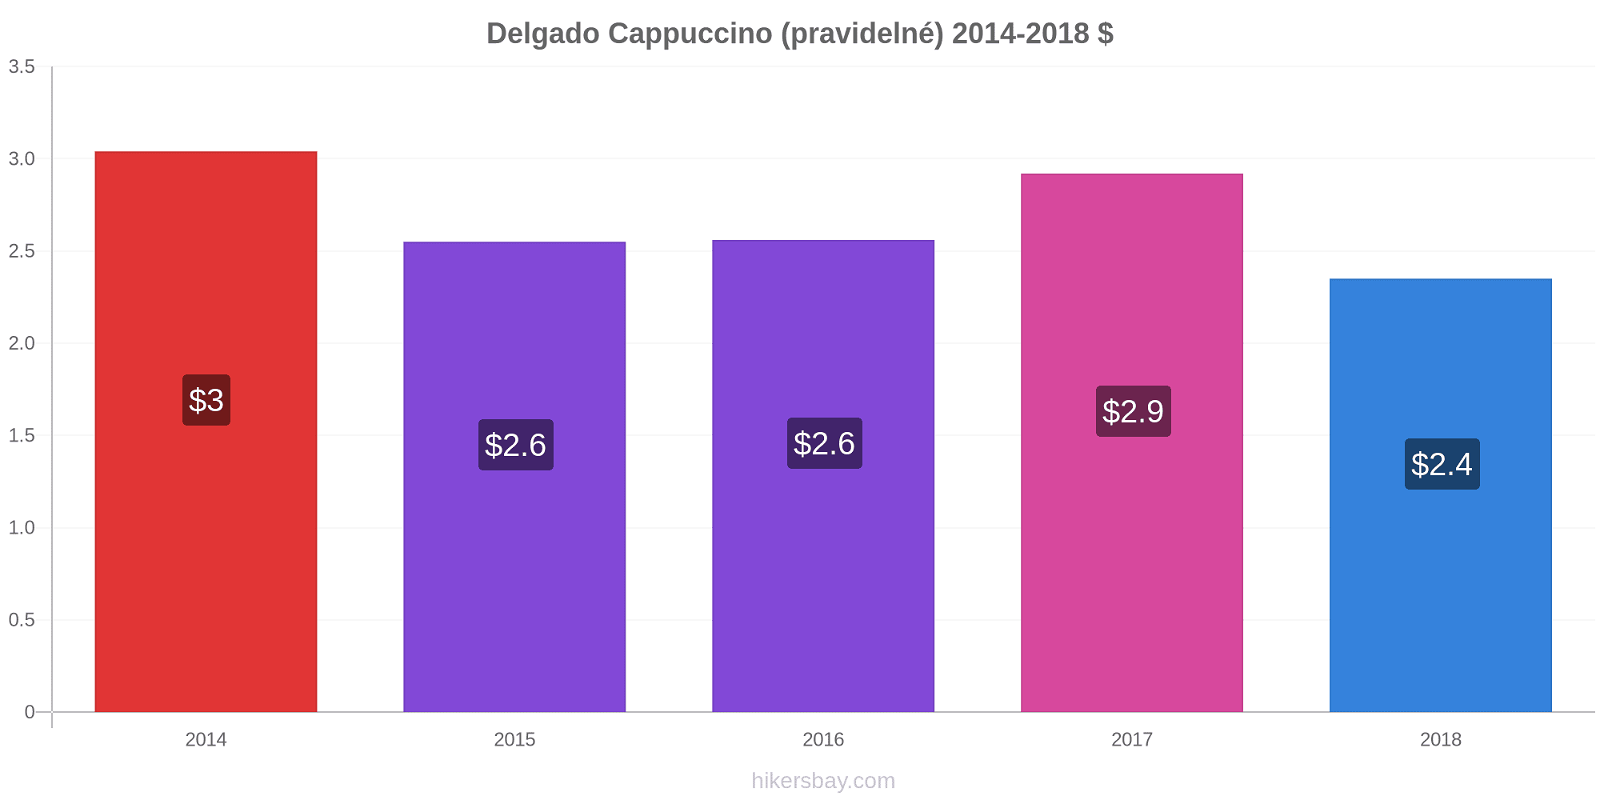 Delgado změny cen Cappuccino (pravidelné) hikersbay.com